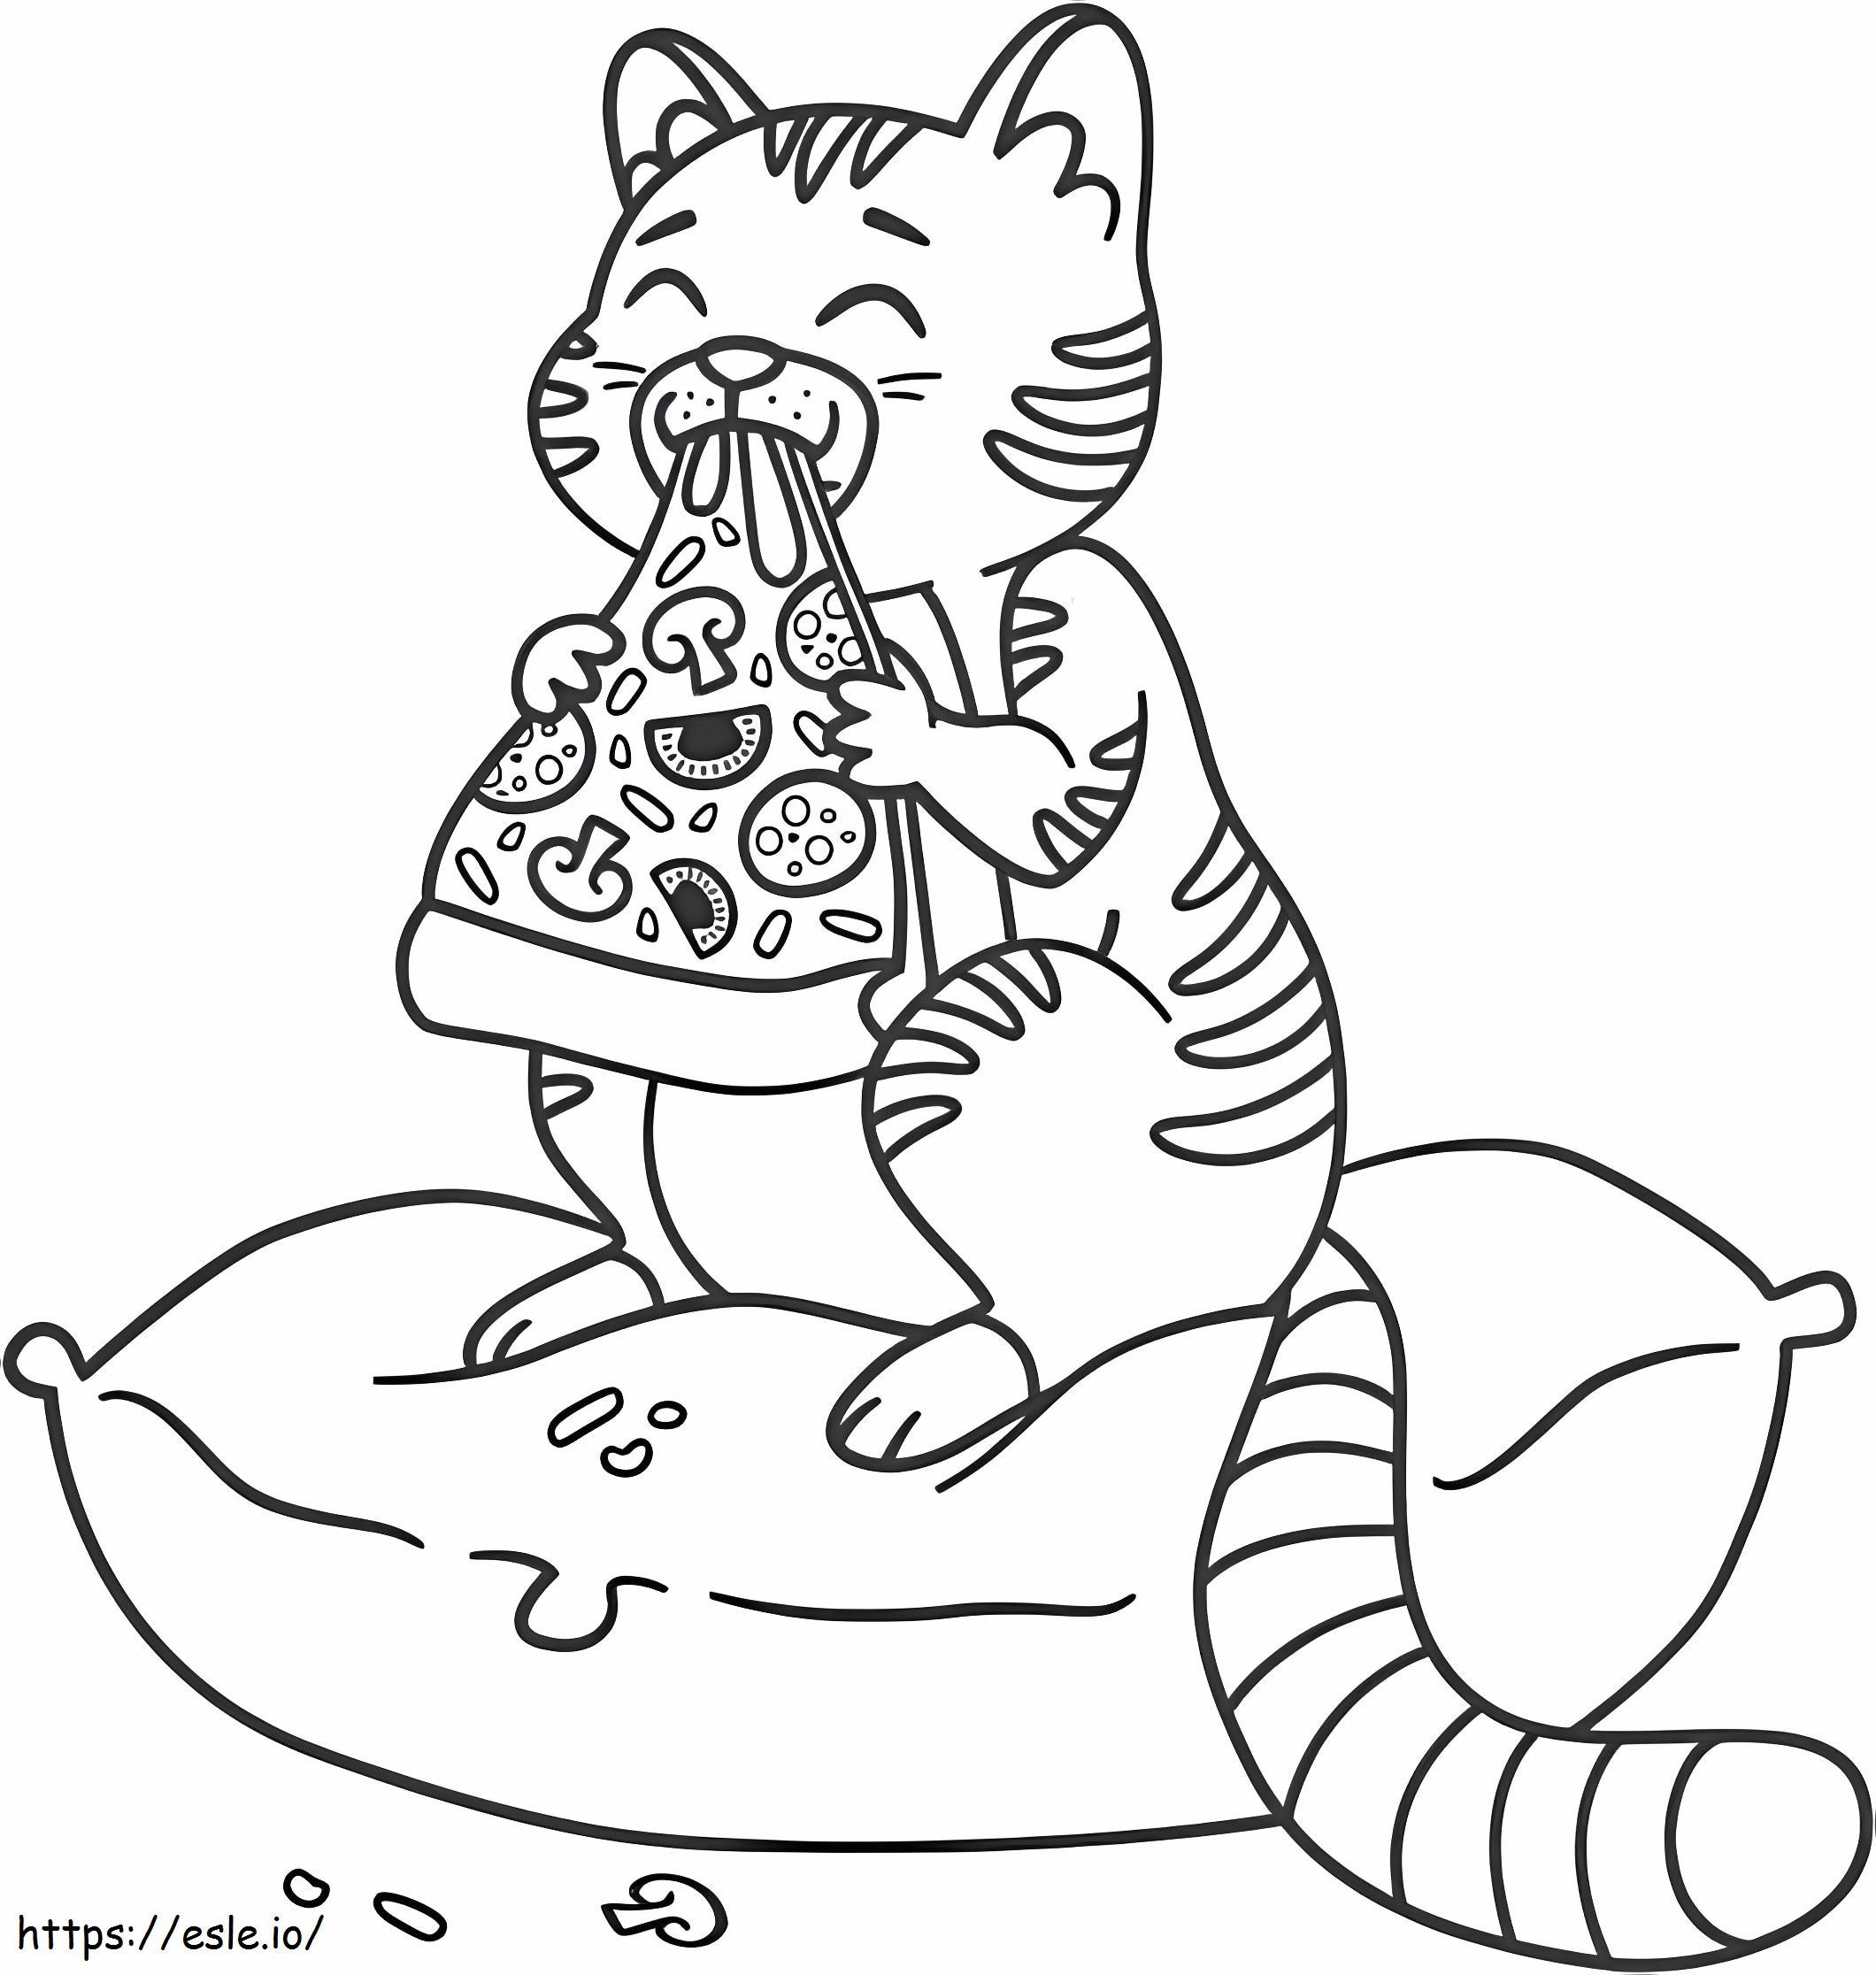 Katze isst Pizza ausmalbilder